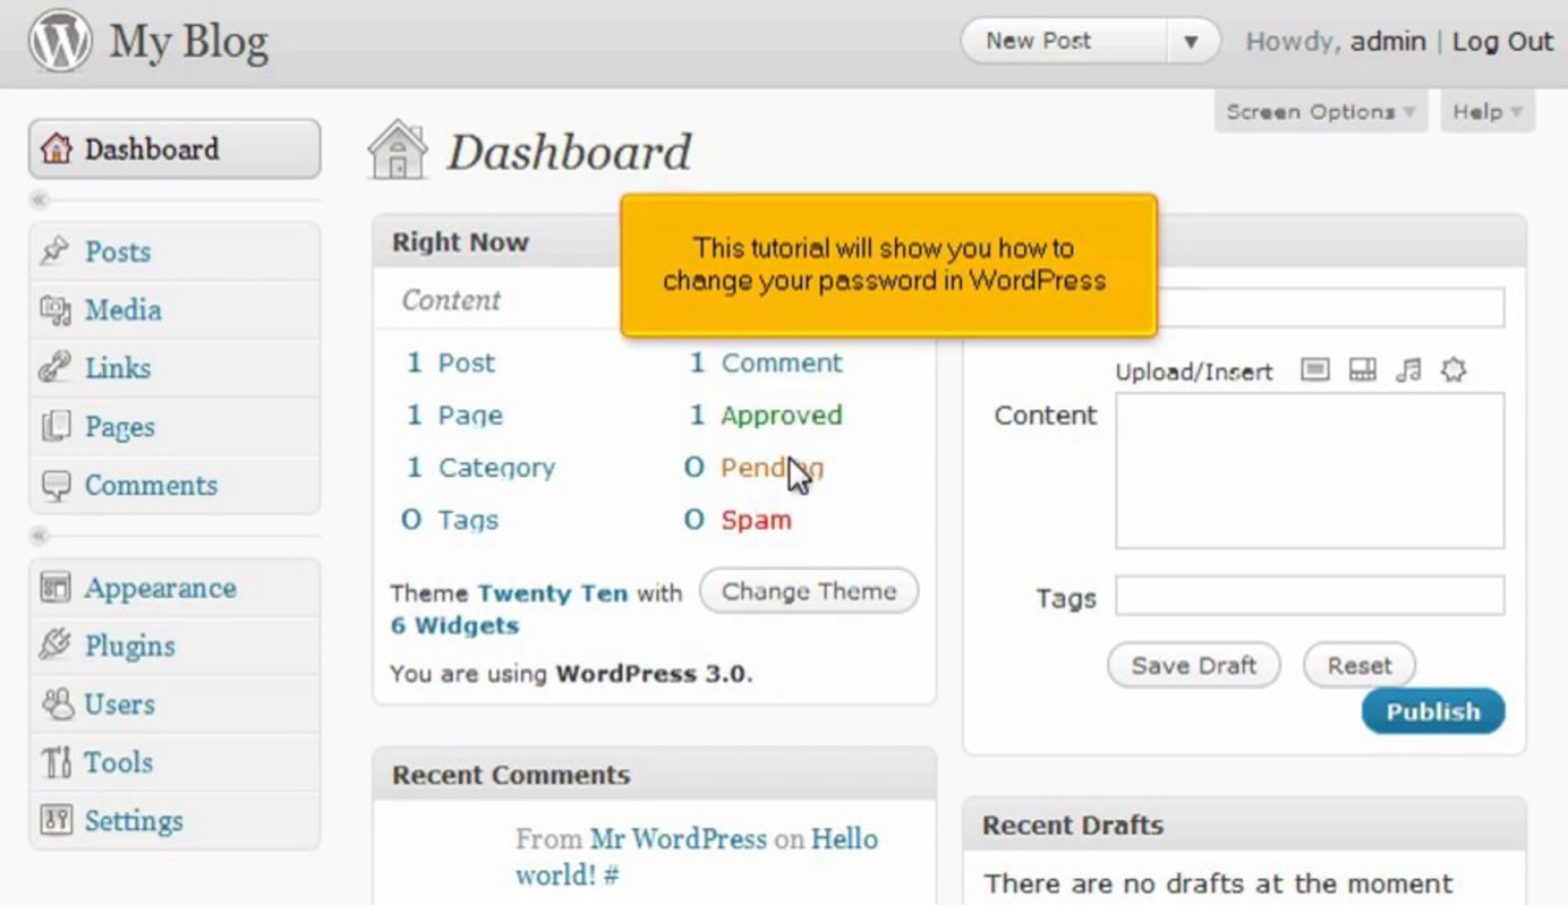 How to change your password in WordPress